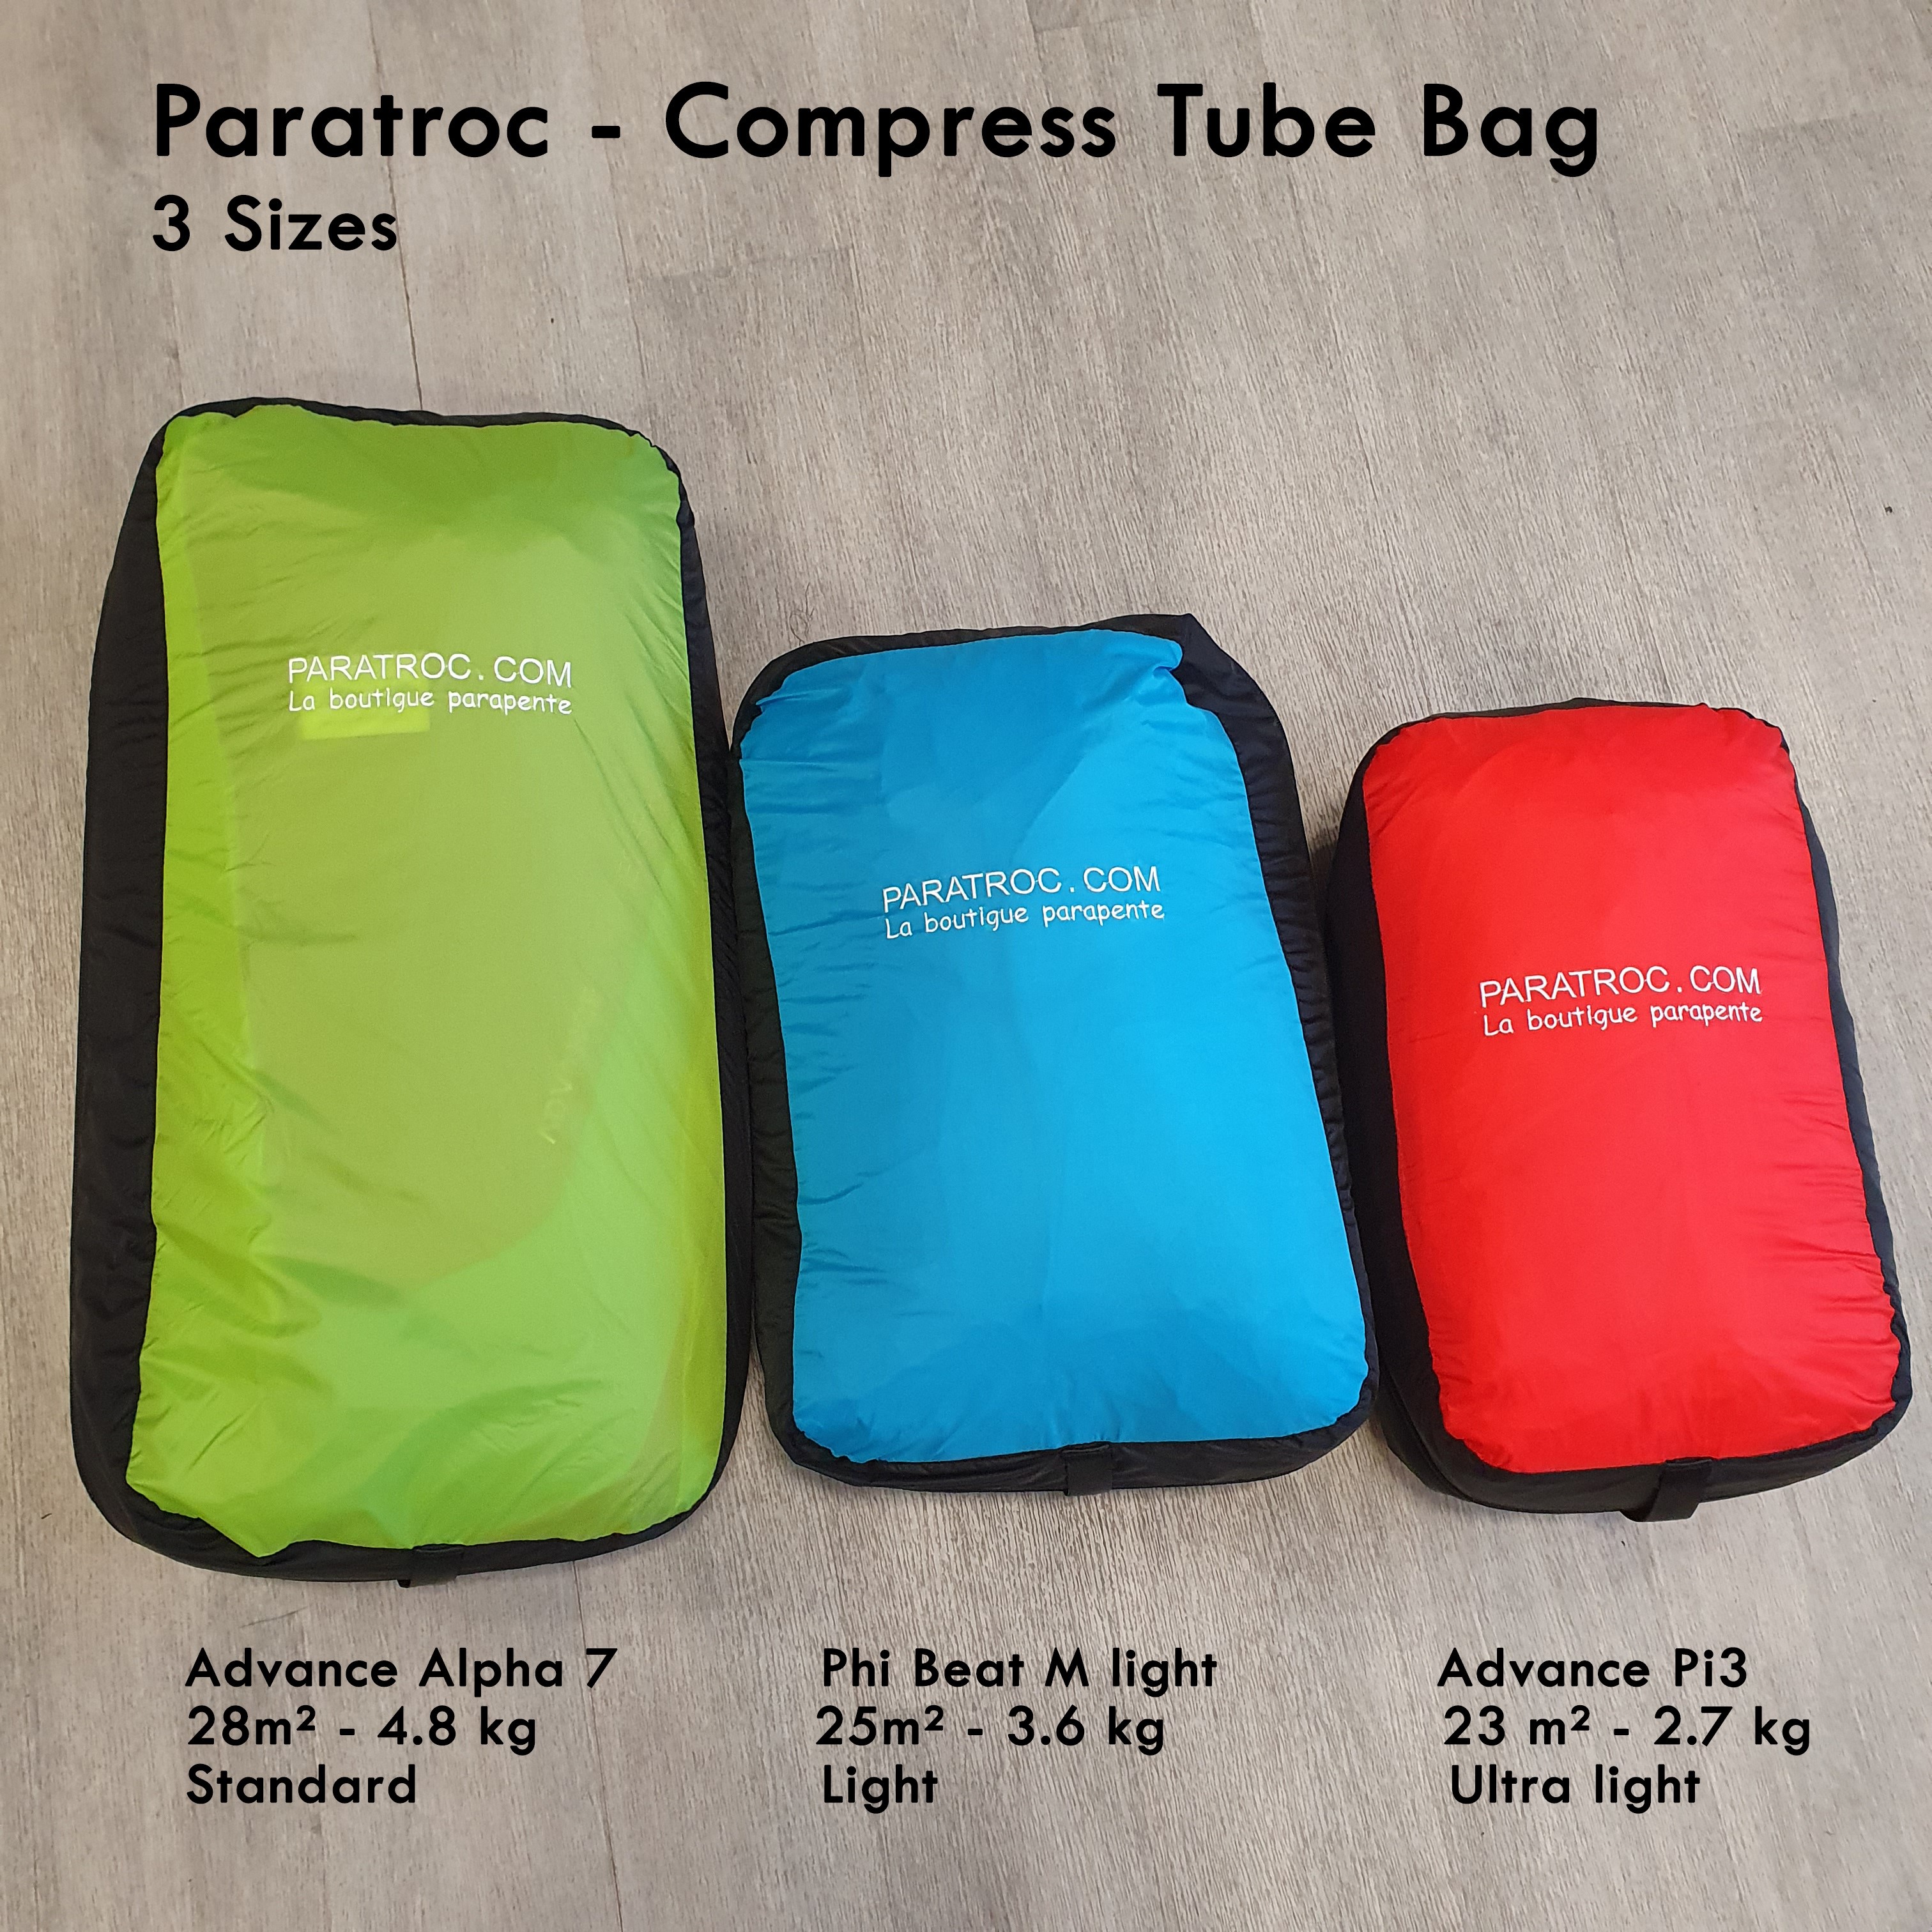 Paratroc - Compress-tube light